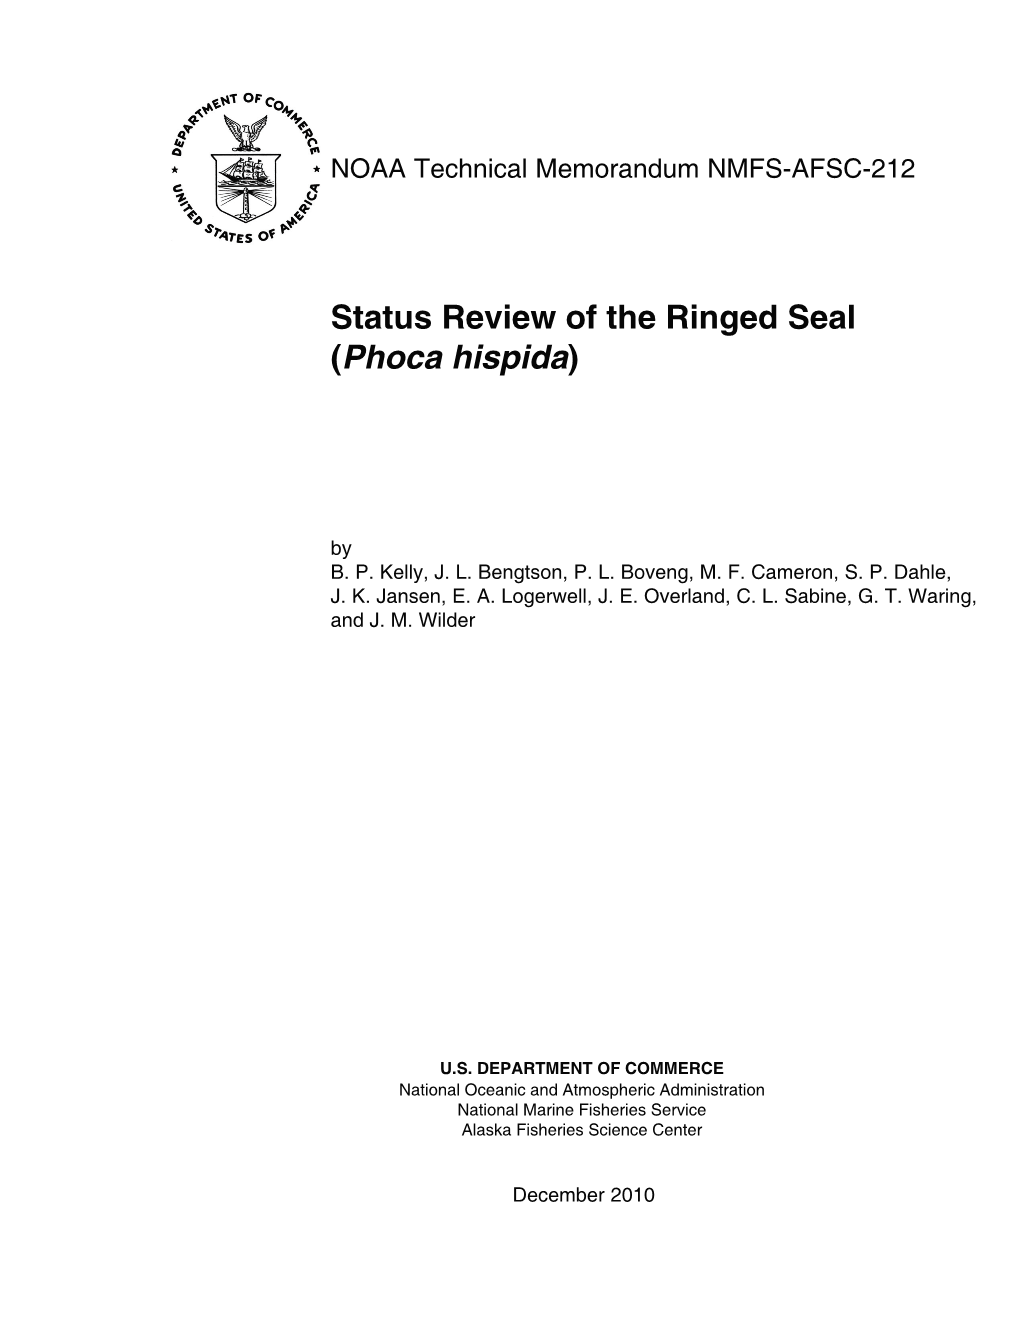 Status Review of the Ringed Seal (Phoca Hispida)